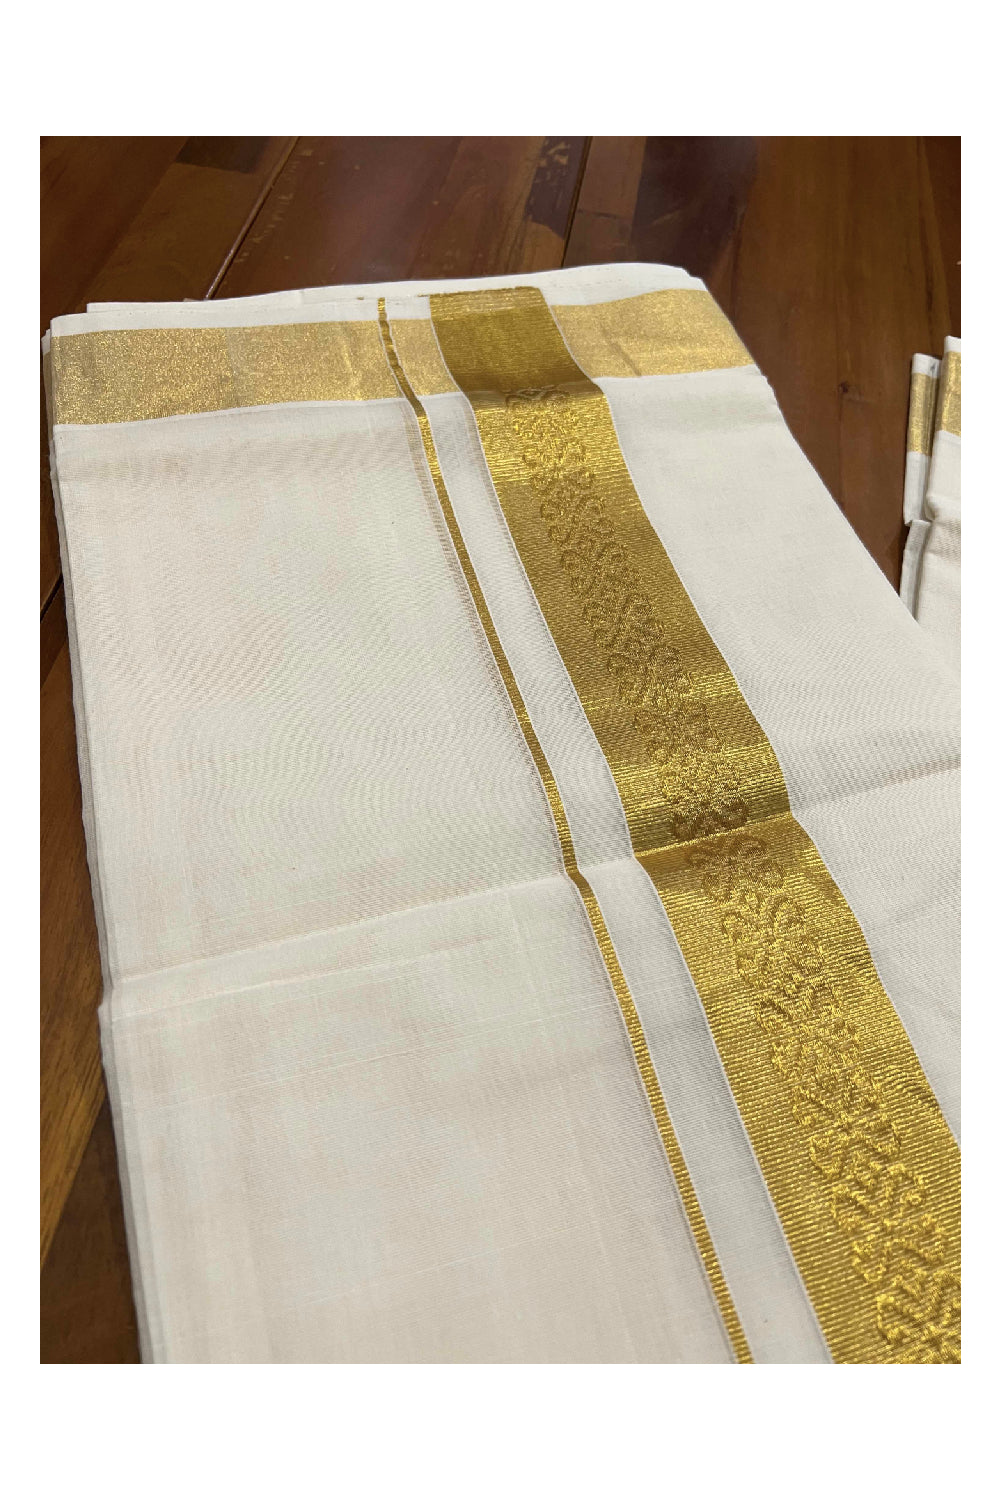 Southloom Balaramapuram Handloom Pure Cotton Wedding Mundu with Kasavu Woven Kara (South Indian Dhoti)